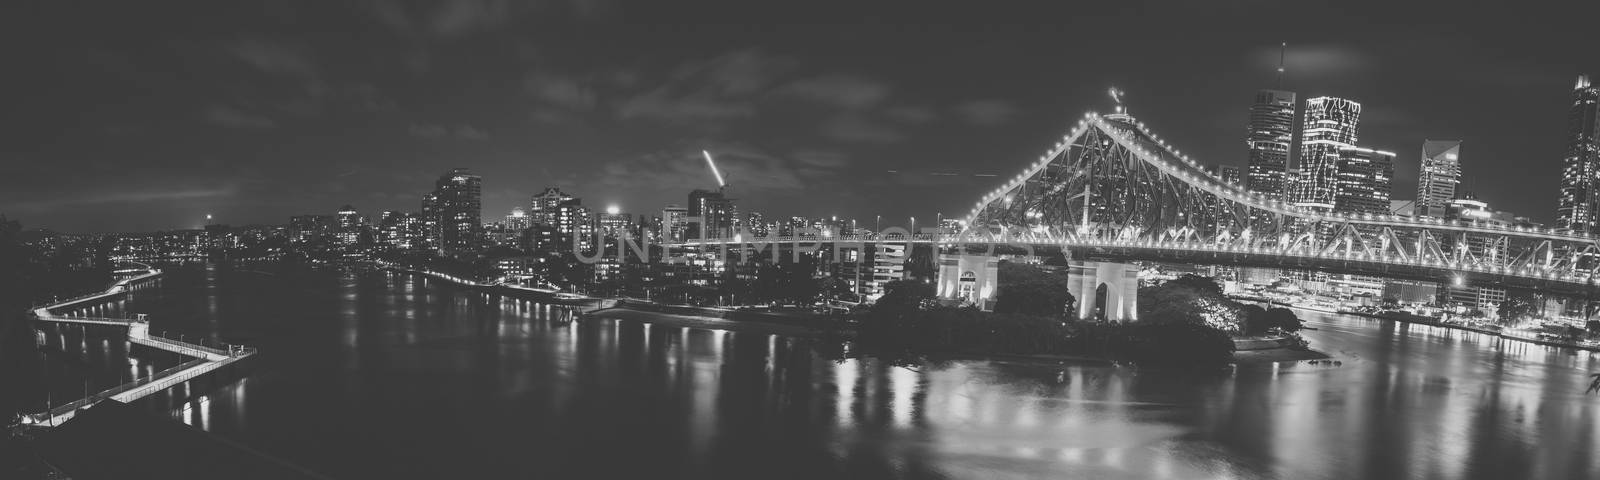 Iconic Story Bridge, river and Newfarm Riverwalk in Brisbane, Queensland, Australia.